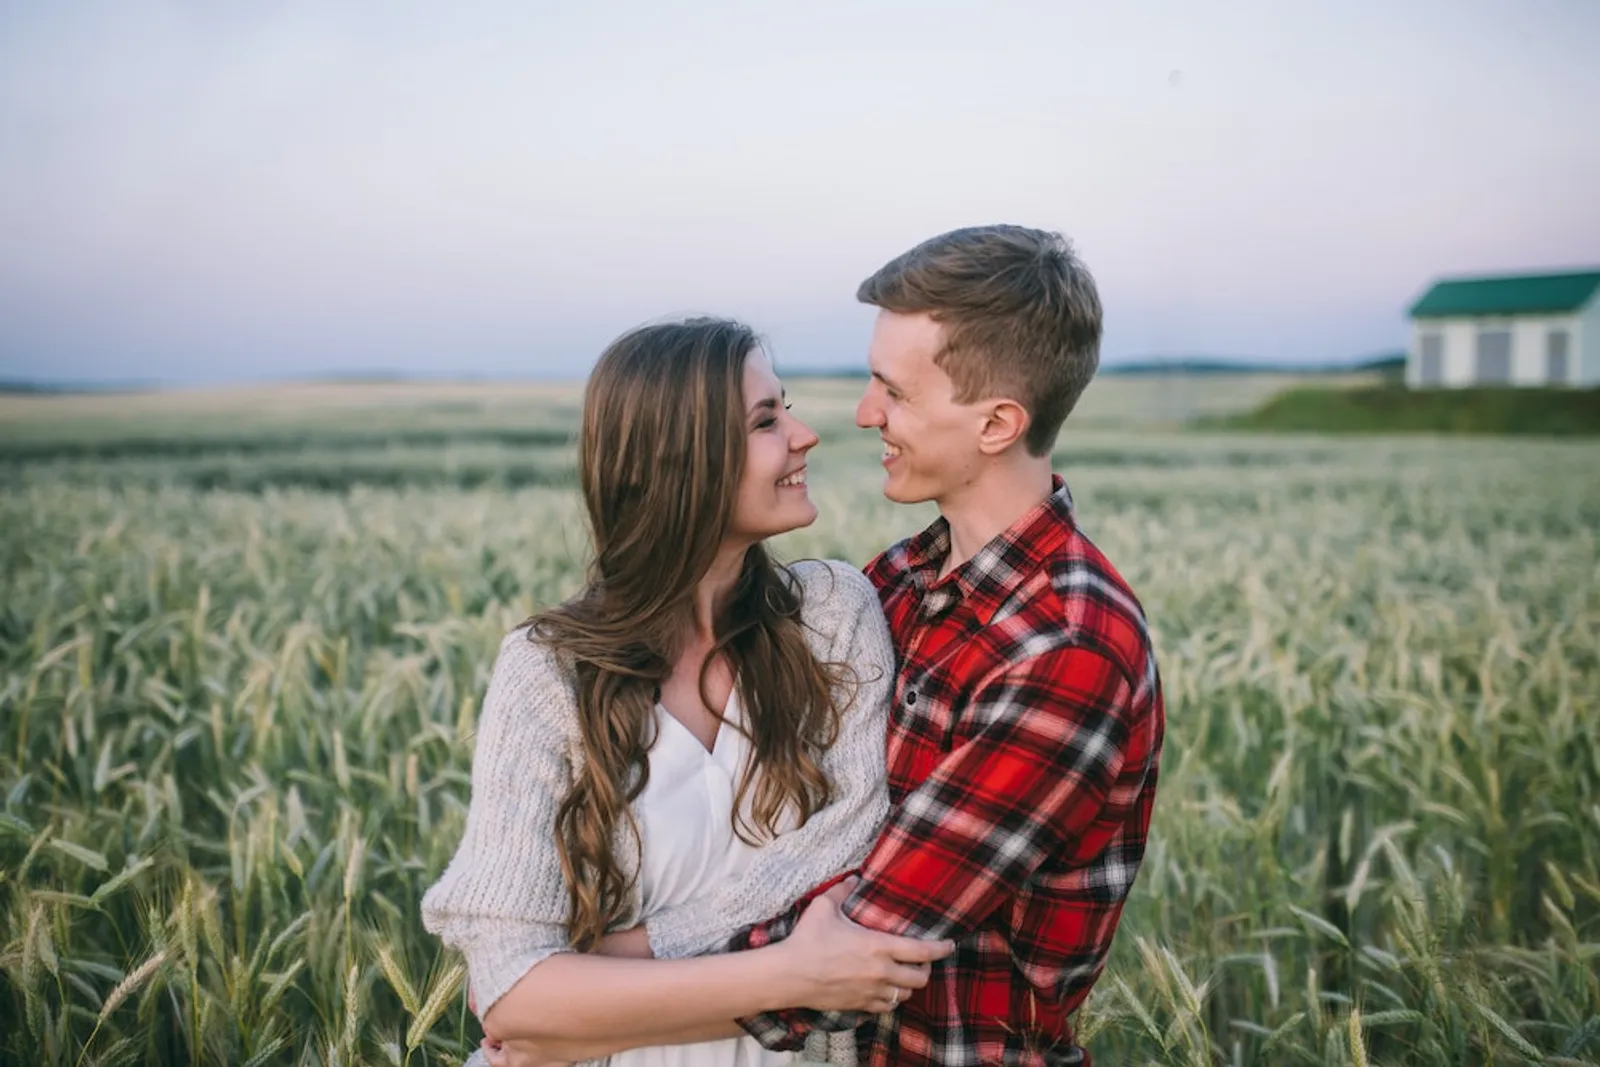 5 Cara Menjadi Dewasa dalam Hubungan, Harus Saling Menghormati